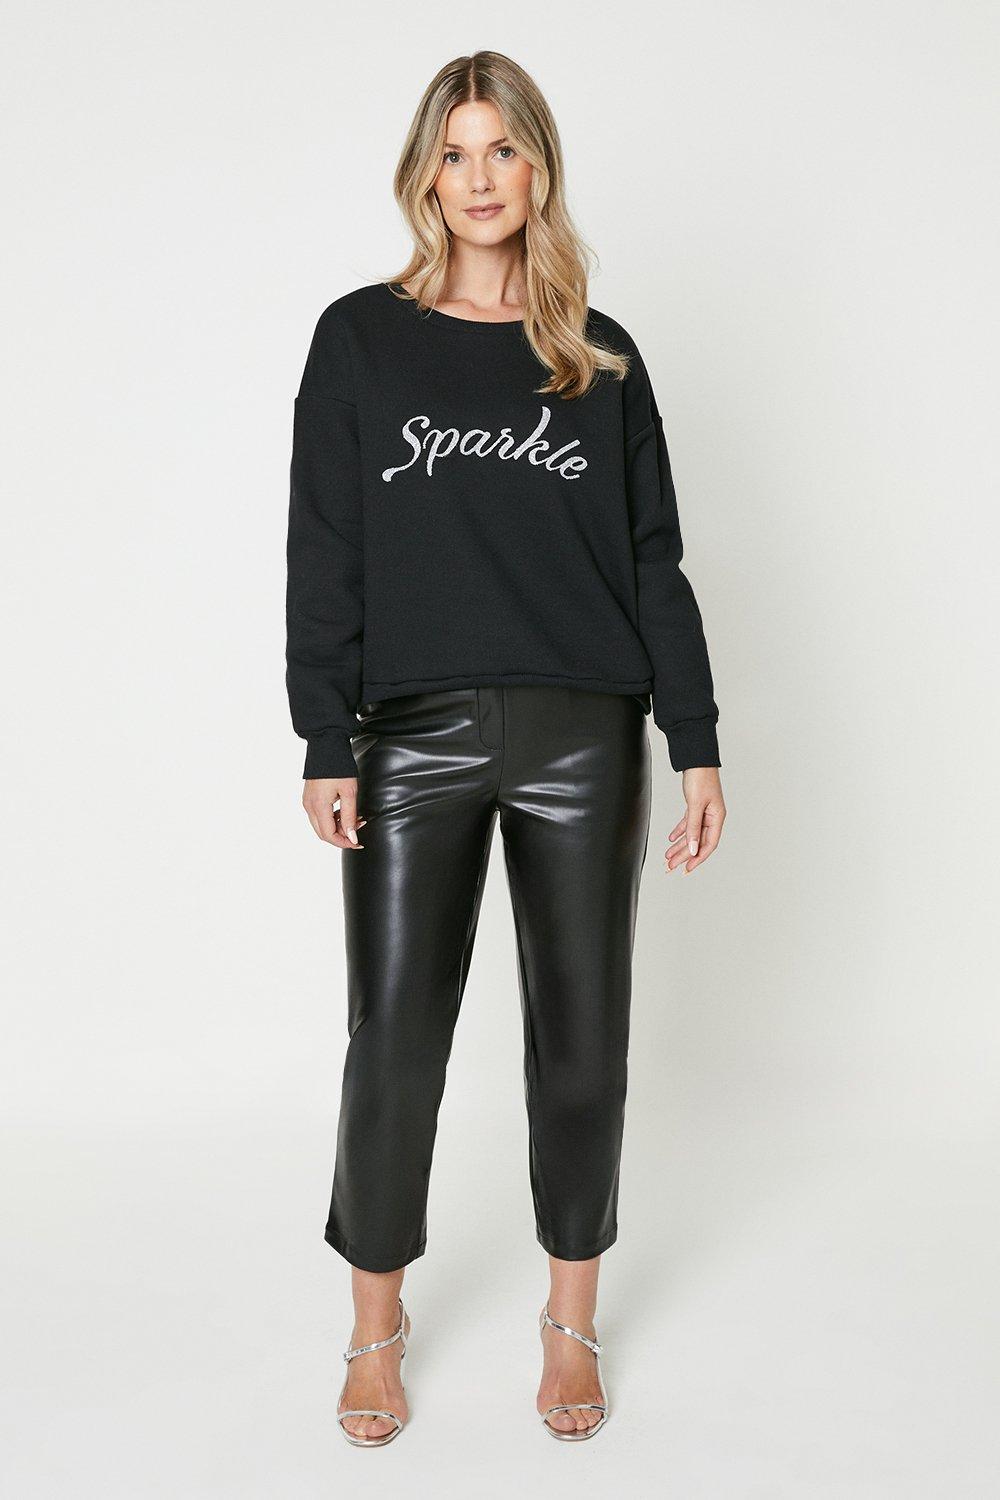 Women’s Sparkle Glitter Puff Sleeve Sweatshirt - black - M